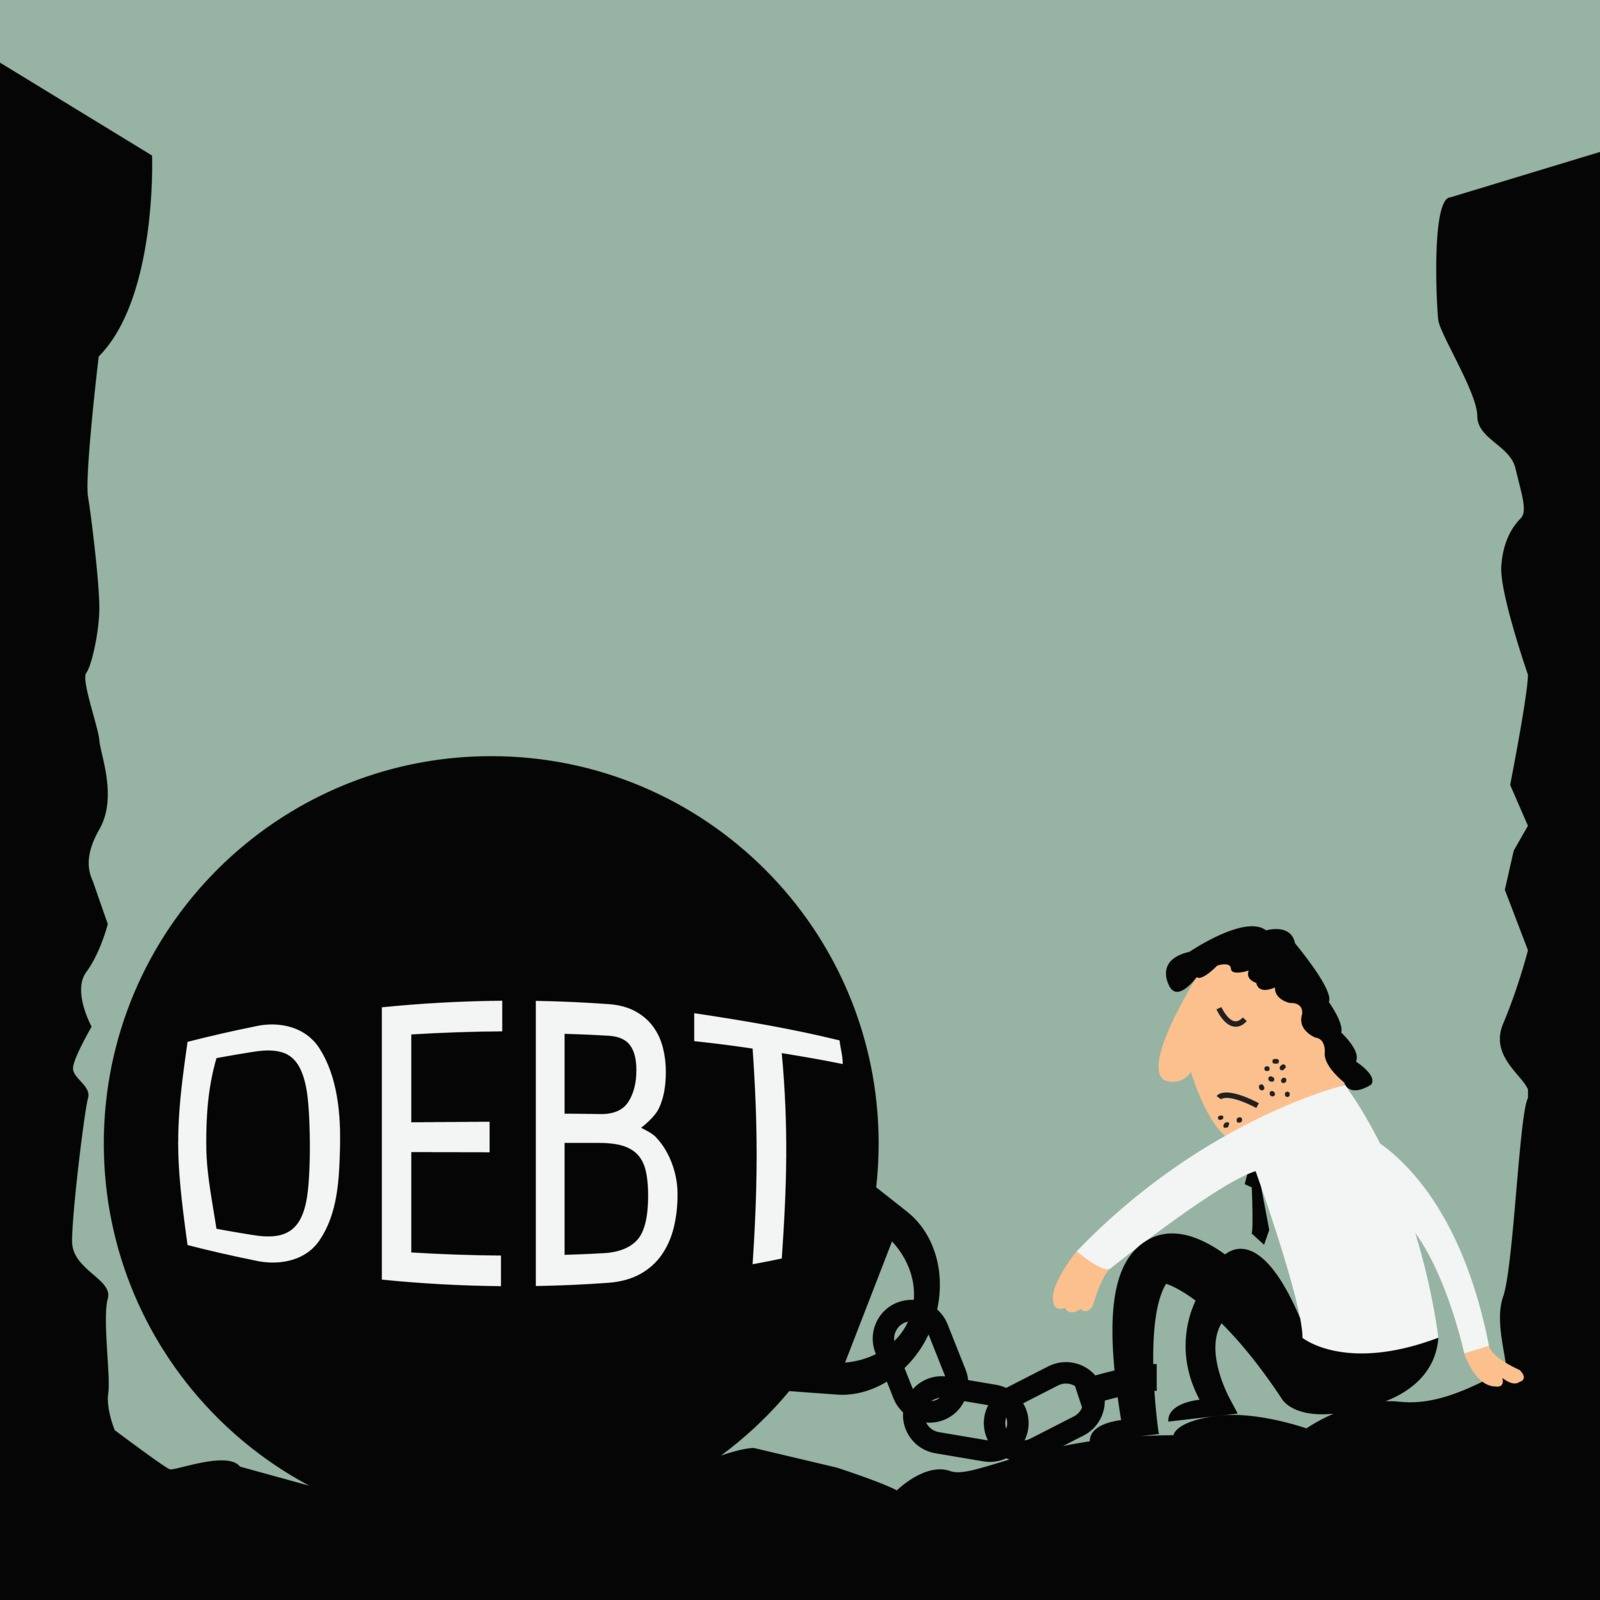 Debt trap by jesadaphorn